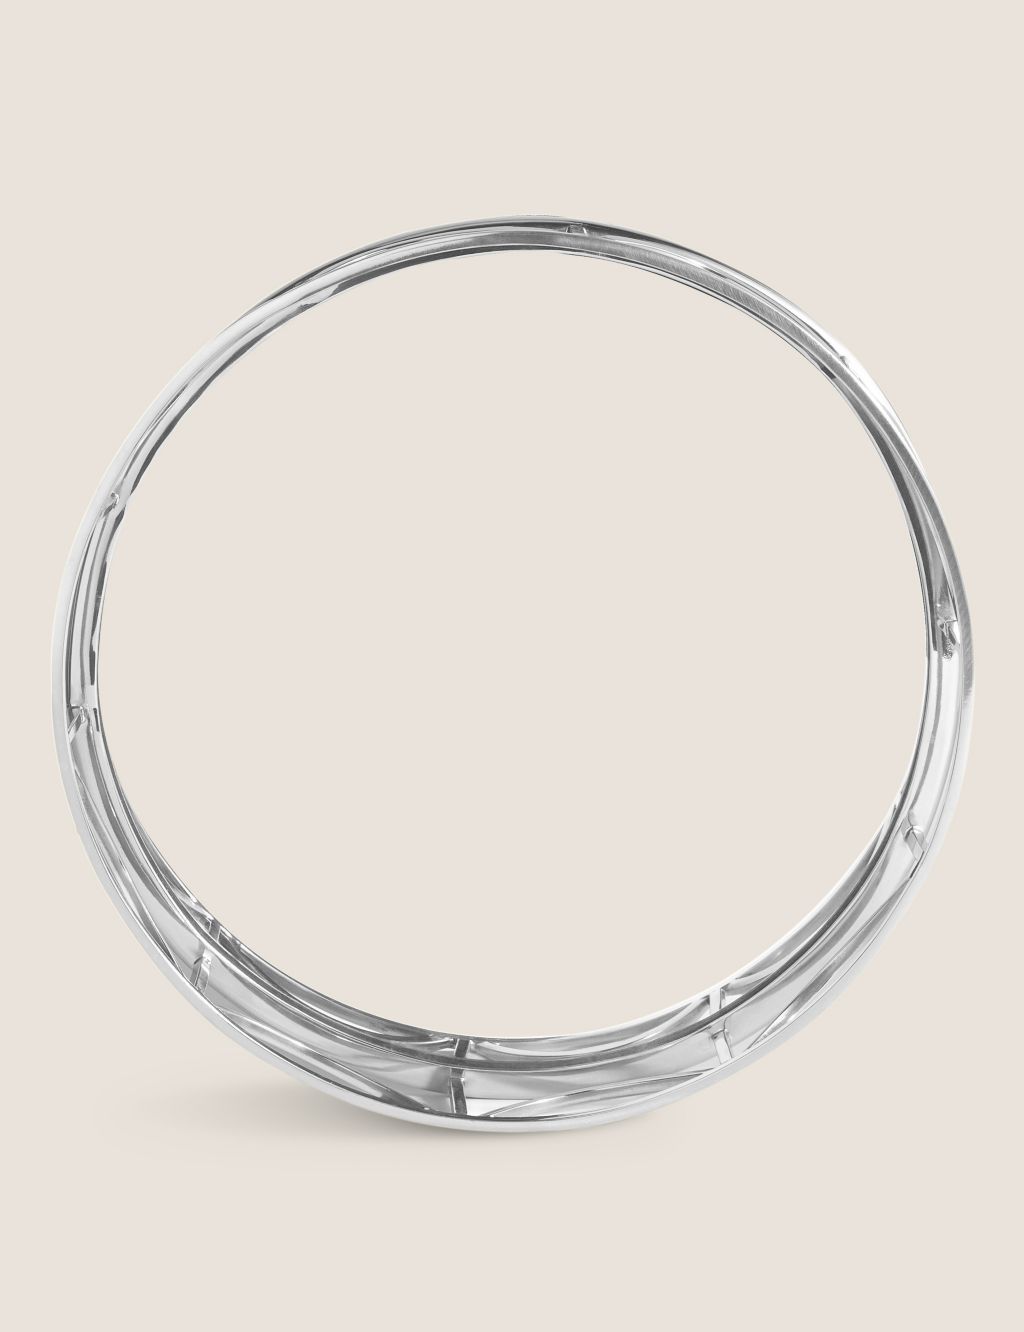 Deco Mirrored Round Tray image 2